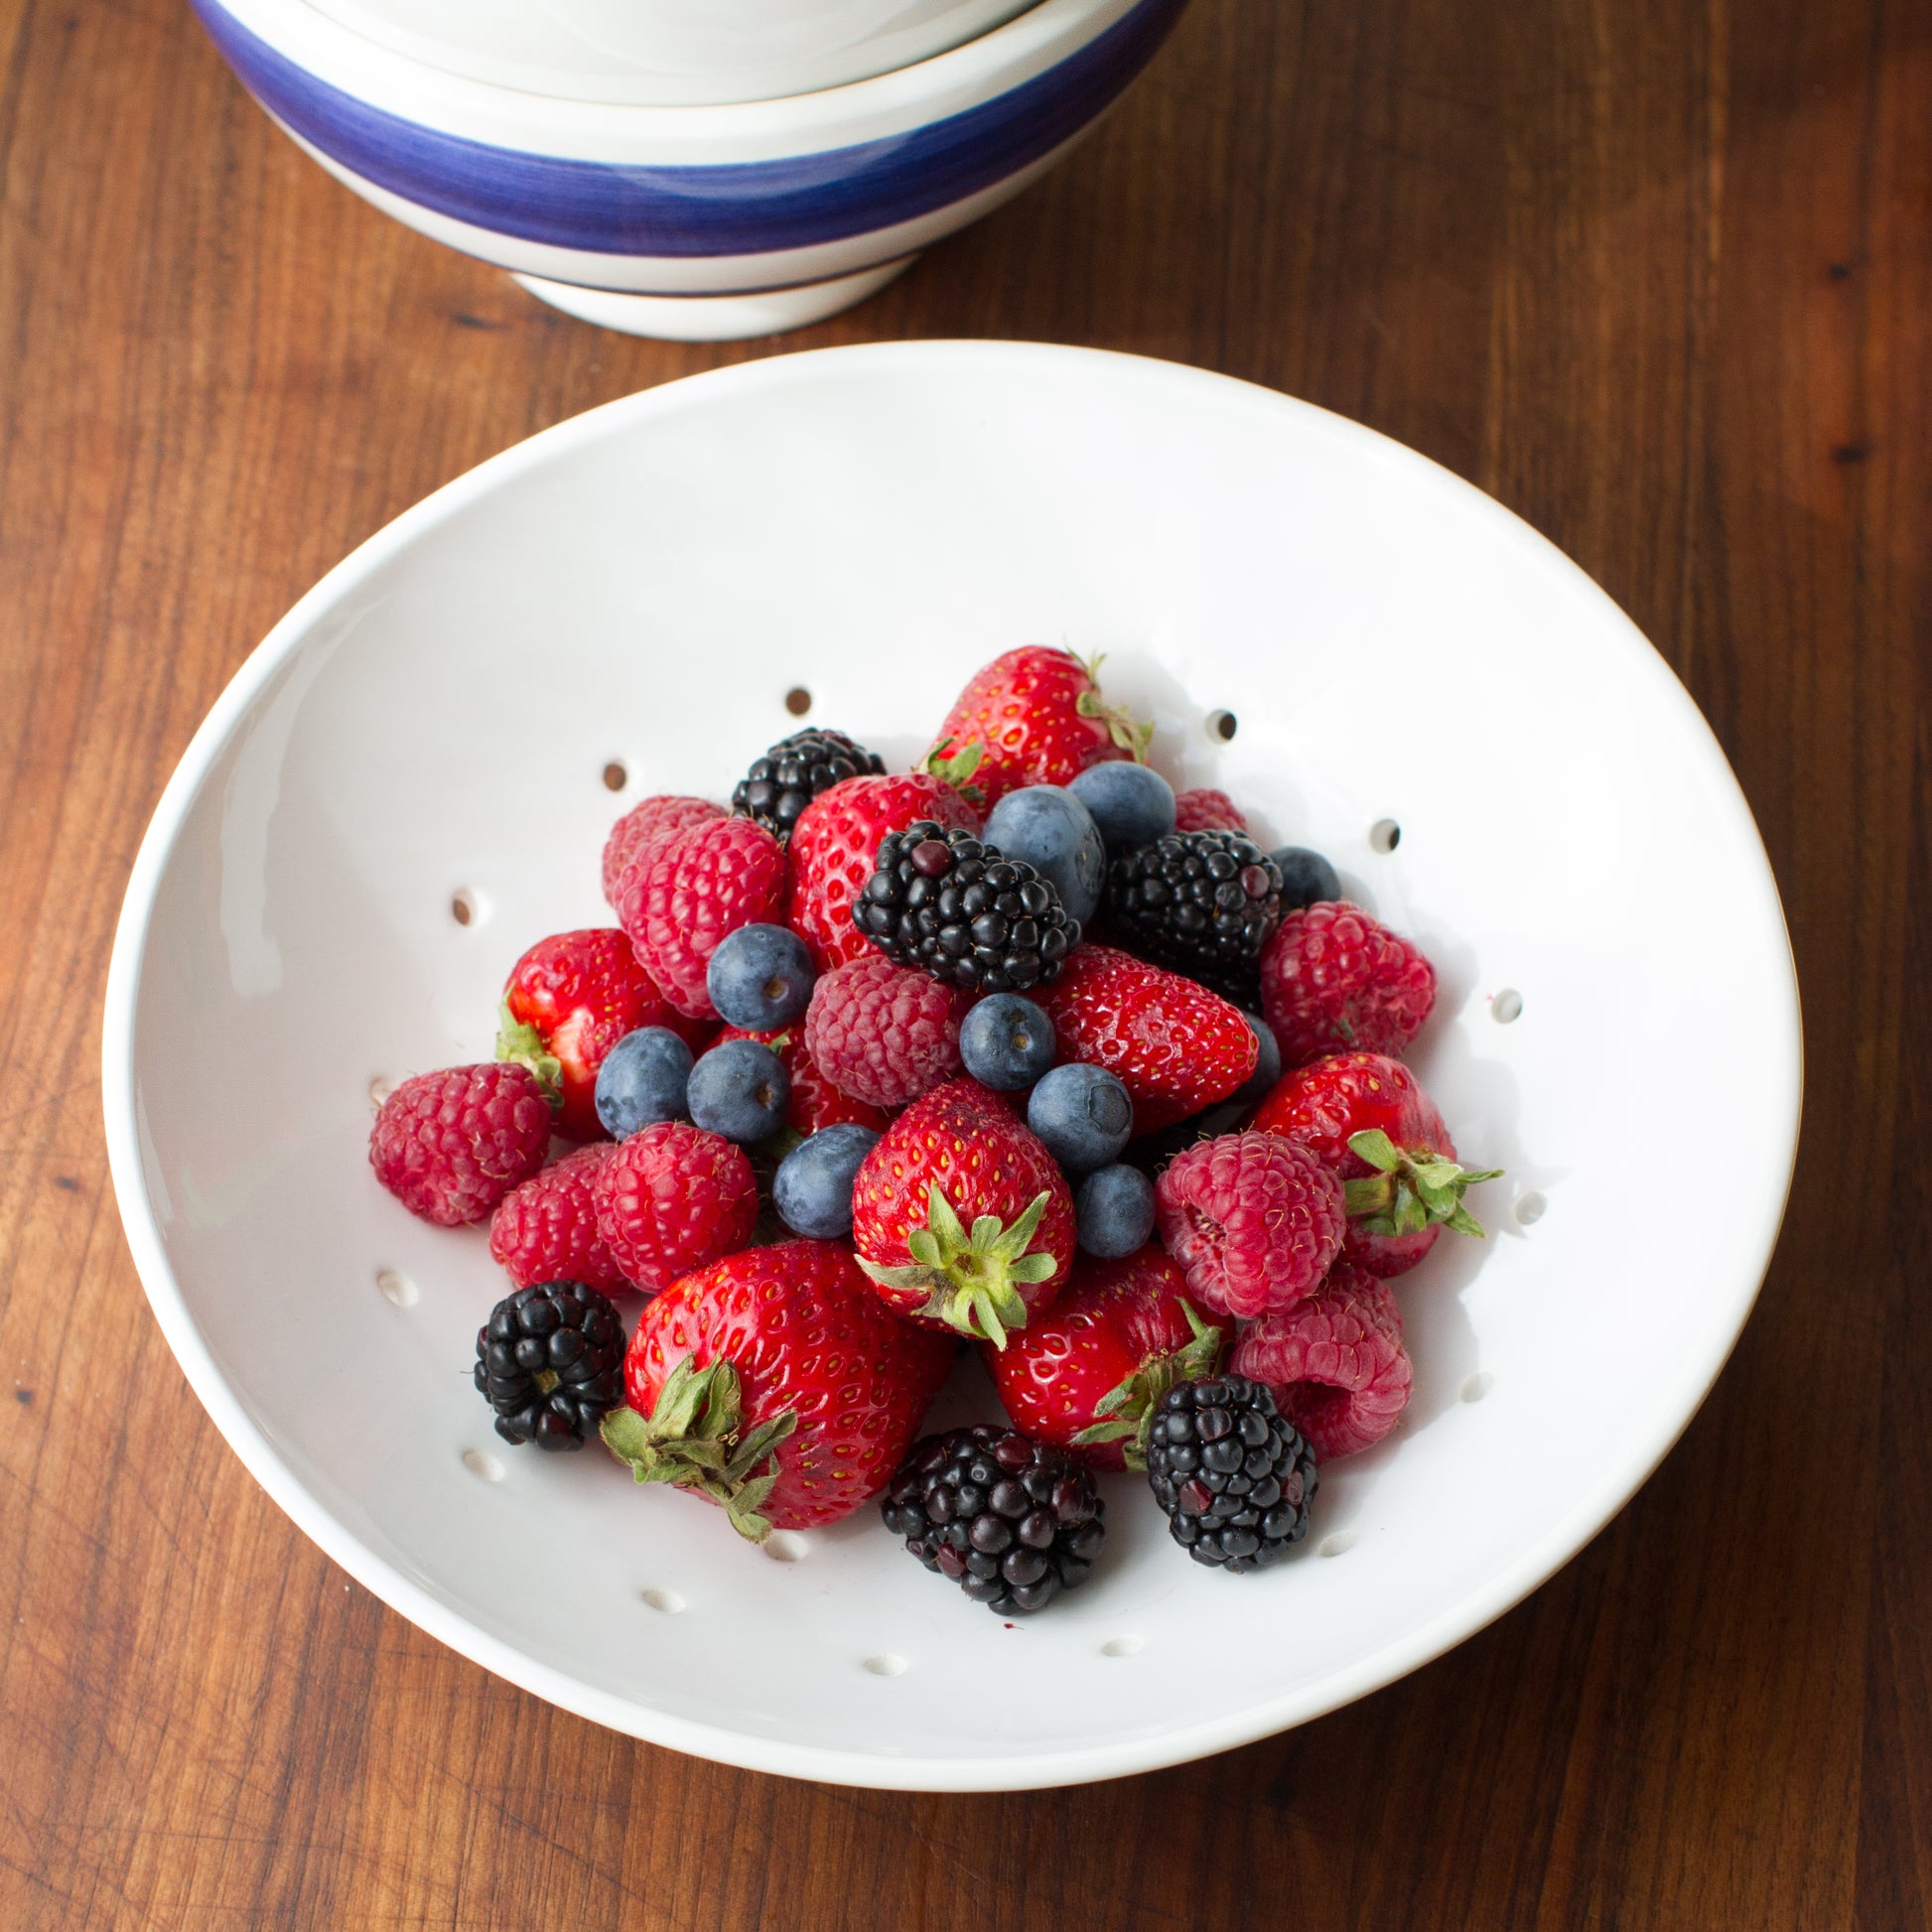 Hudson Grace White Ceramic Berry Bowl overhead with fresh straberries, blueberries and blackberries fruit